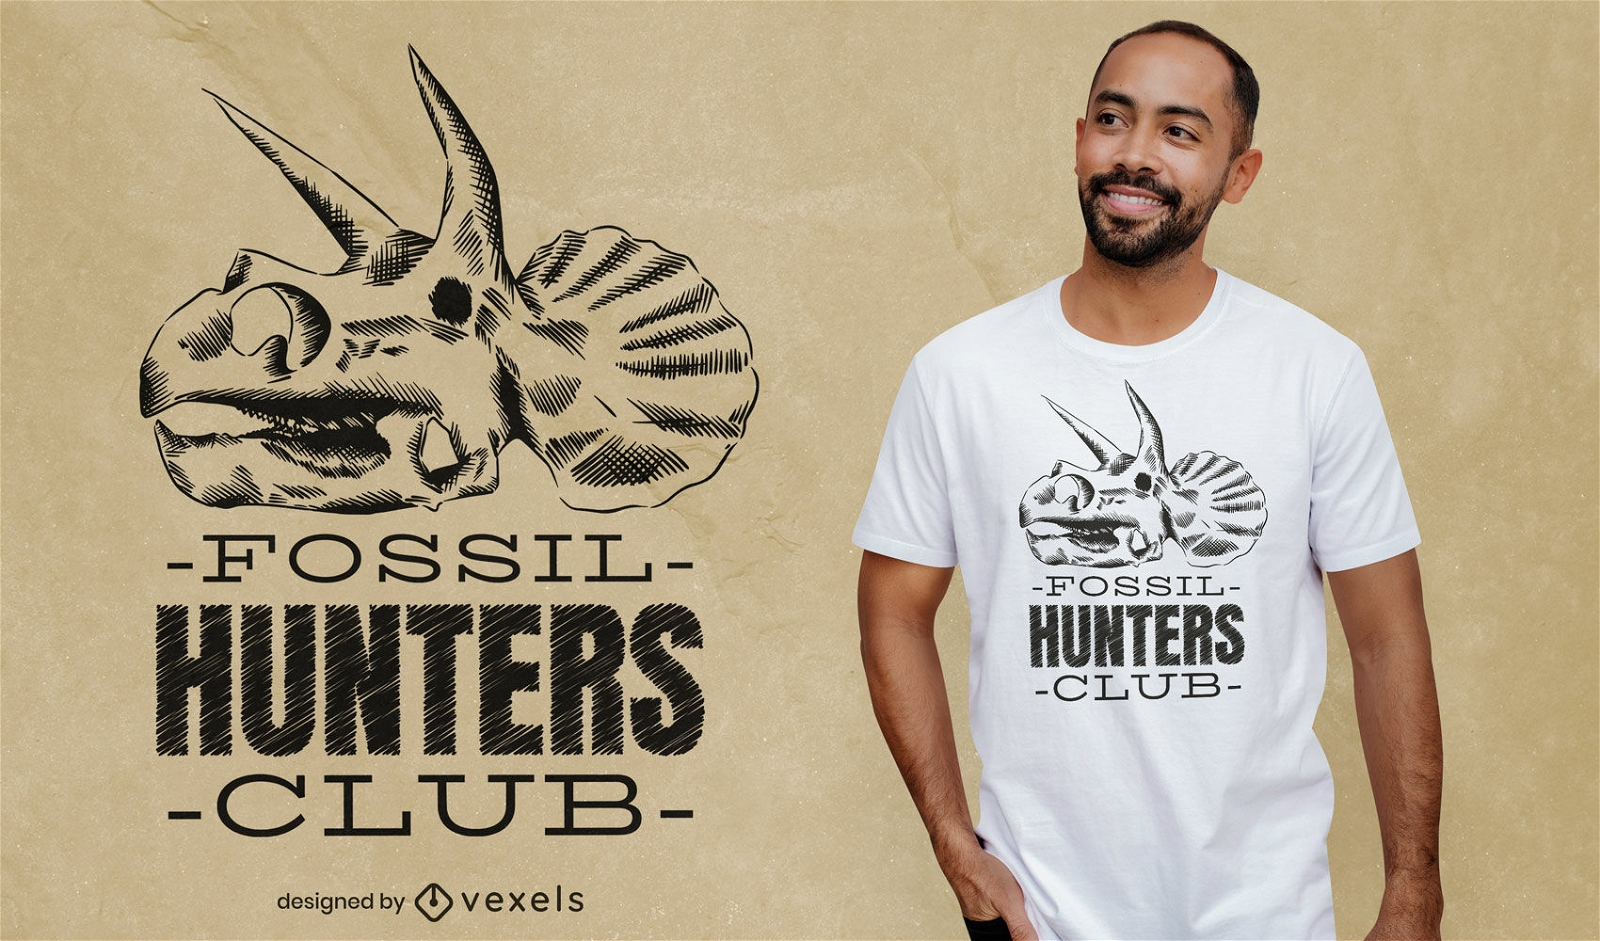 Dinosaur fossil hunters club t-shirt design